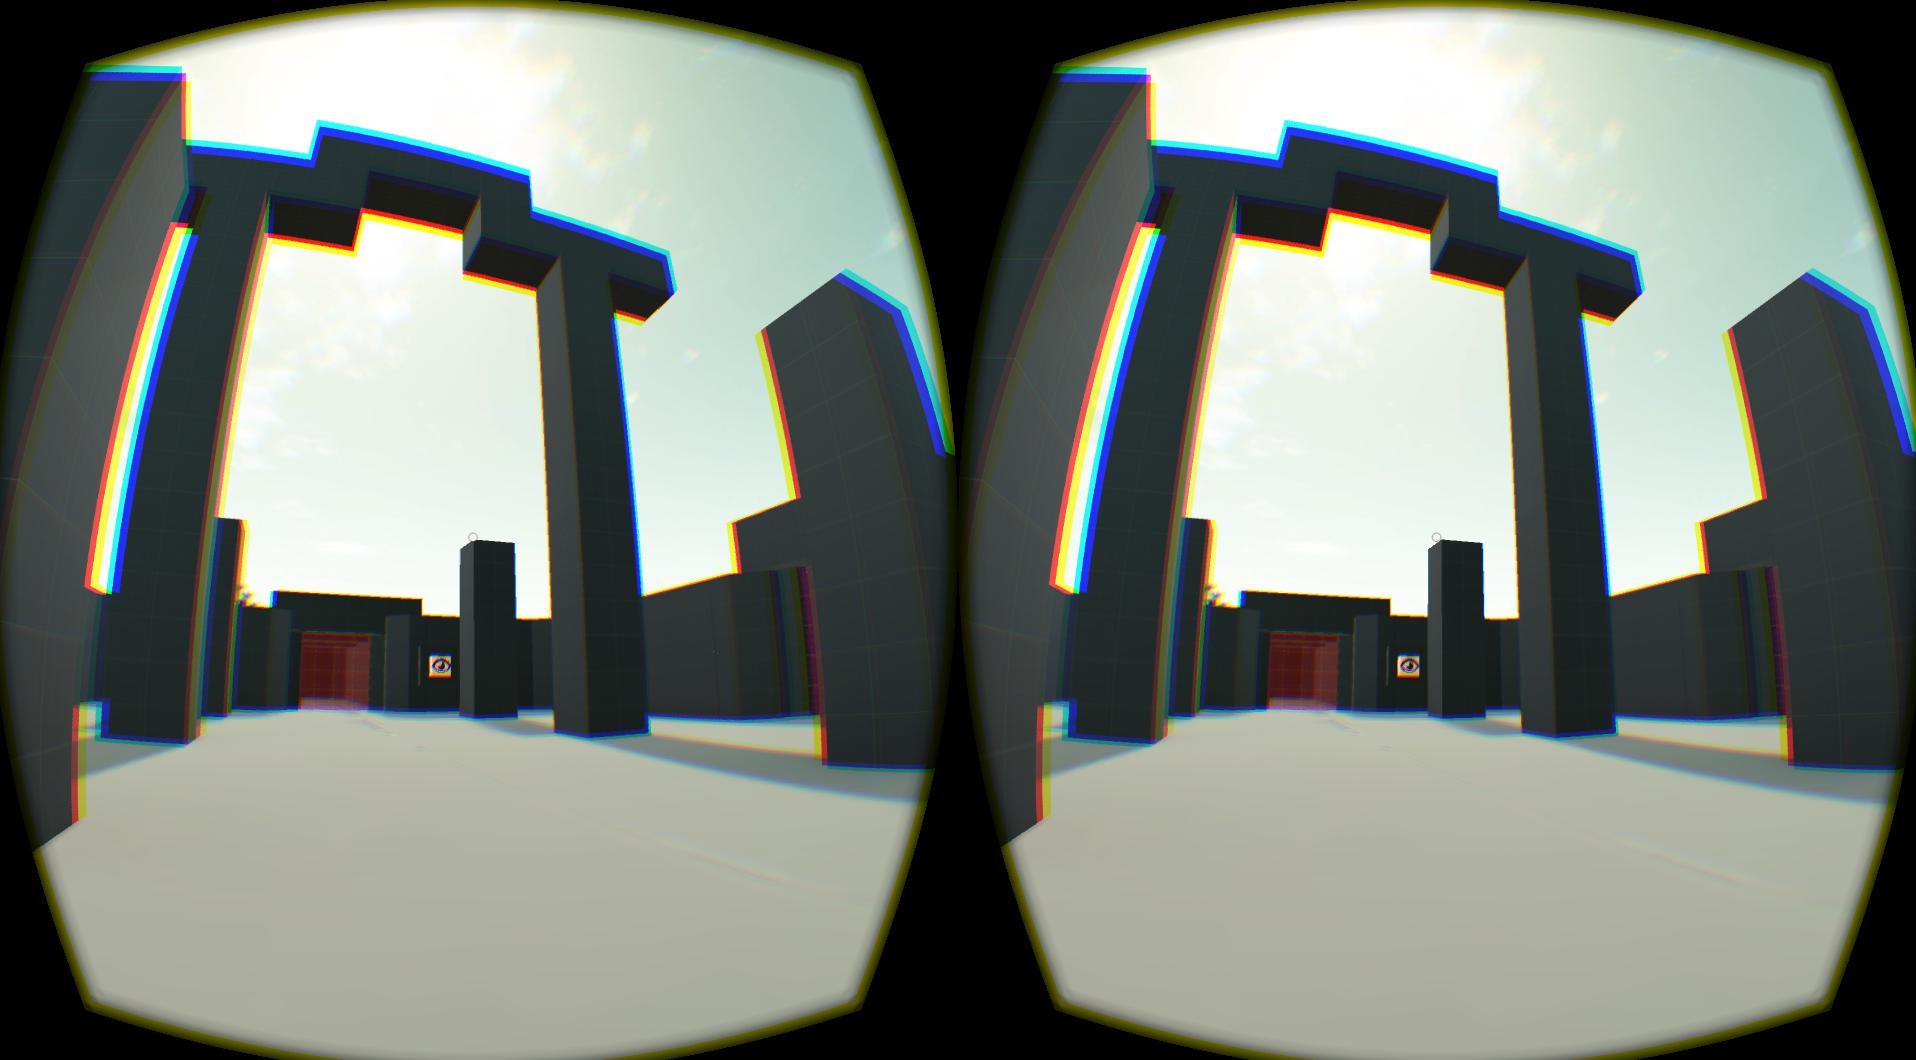 VR Maze. Interactive vr